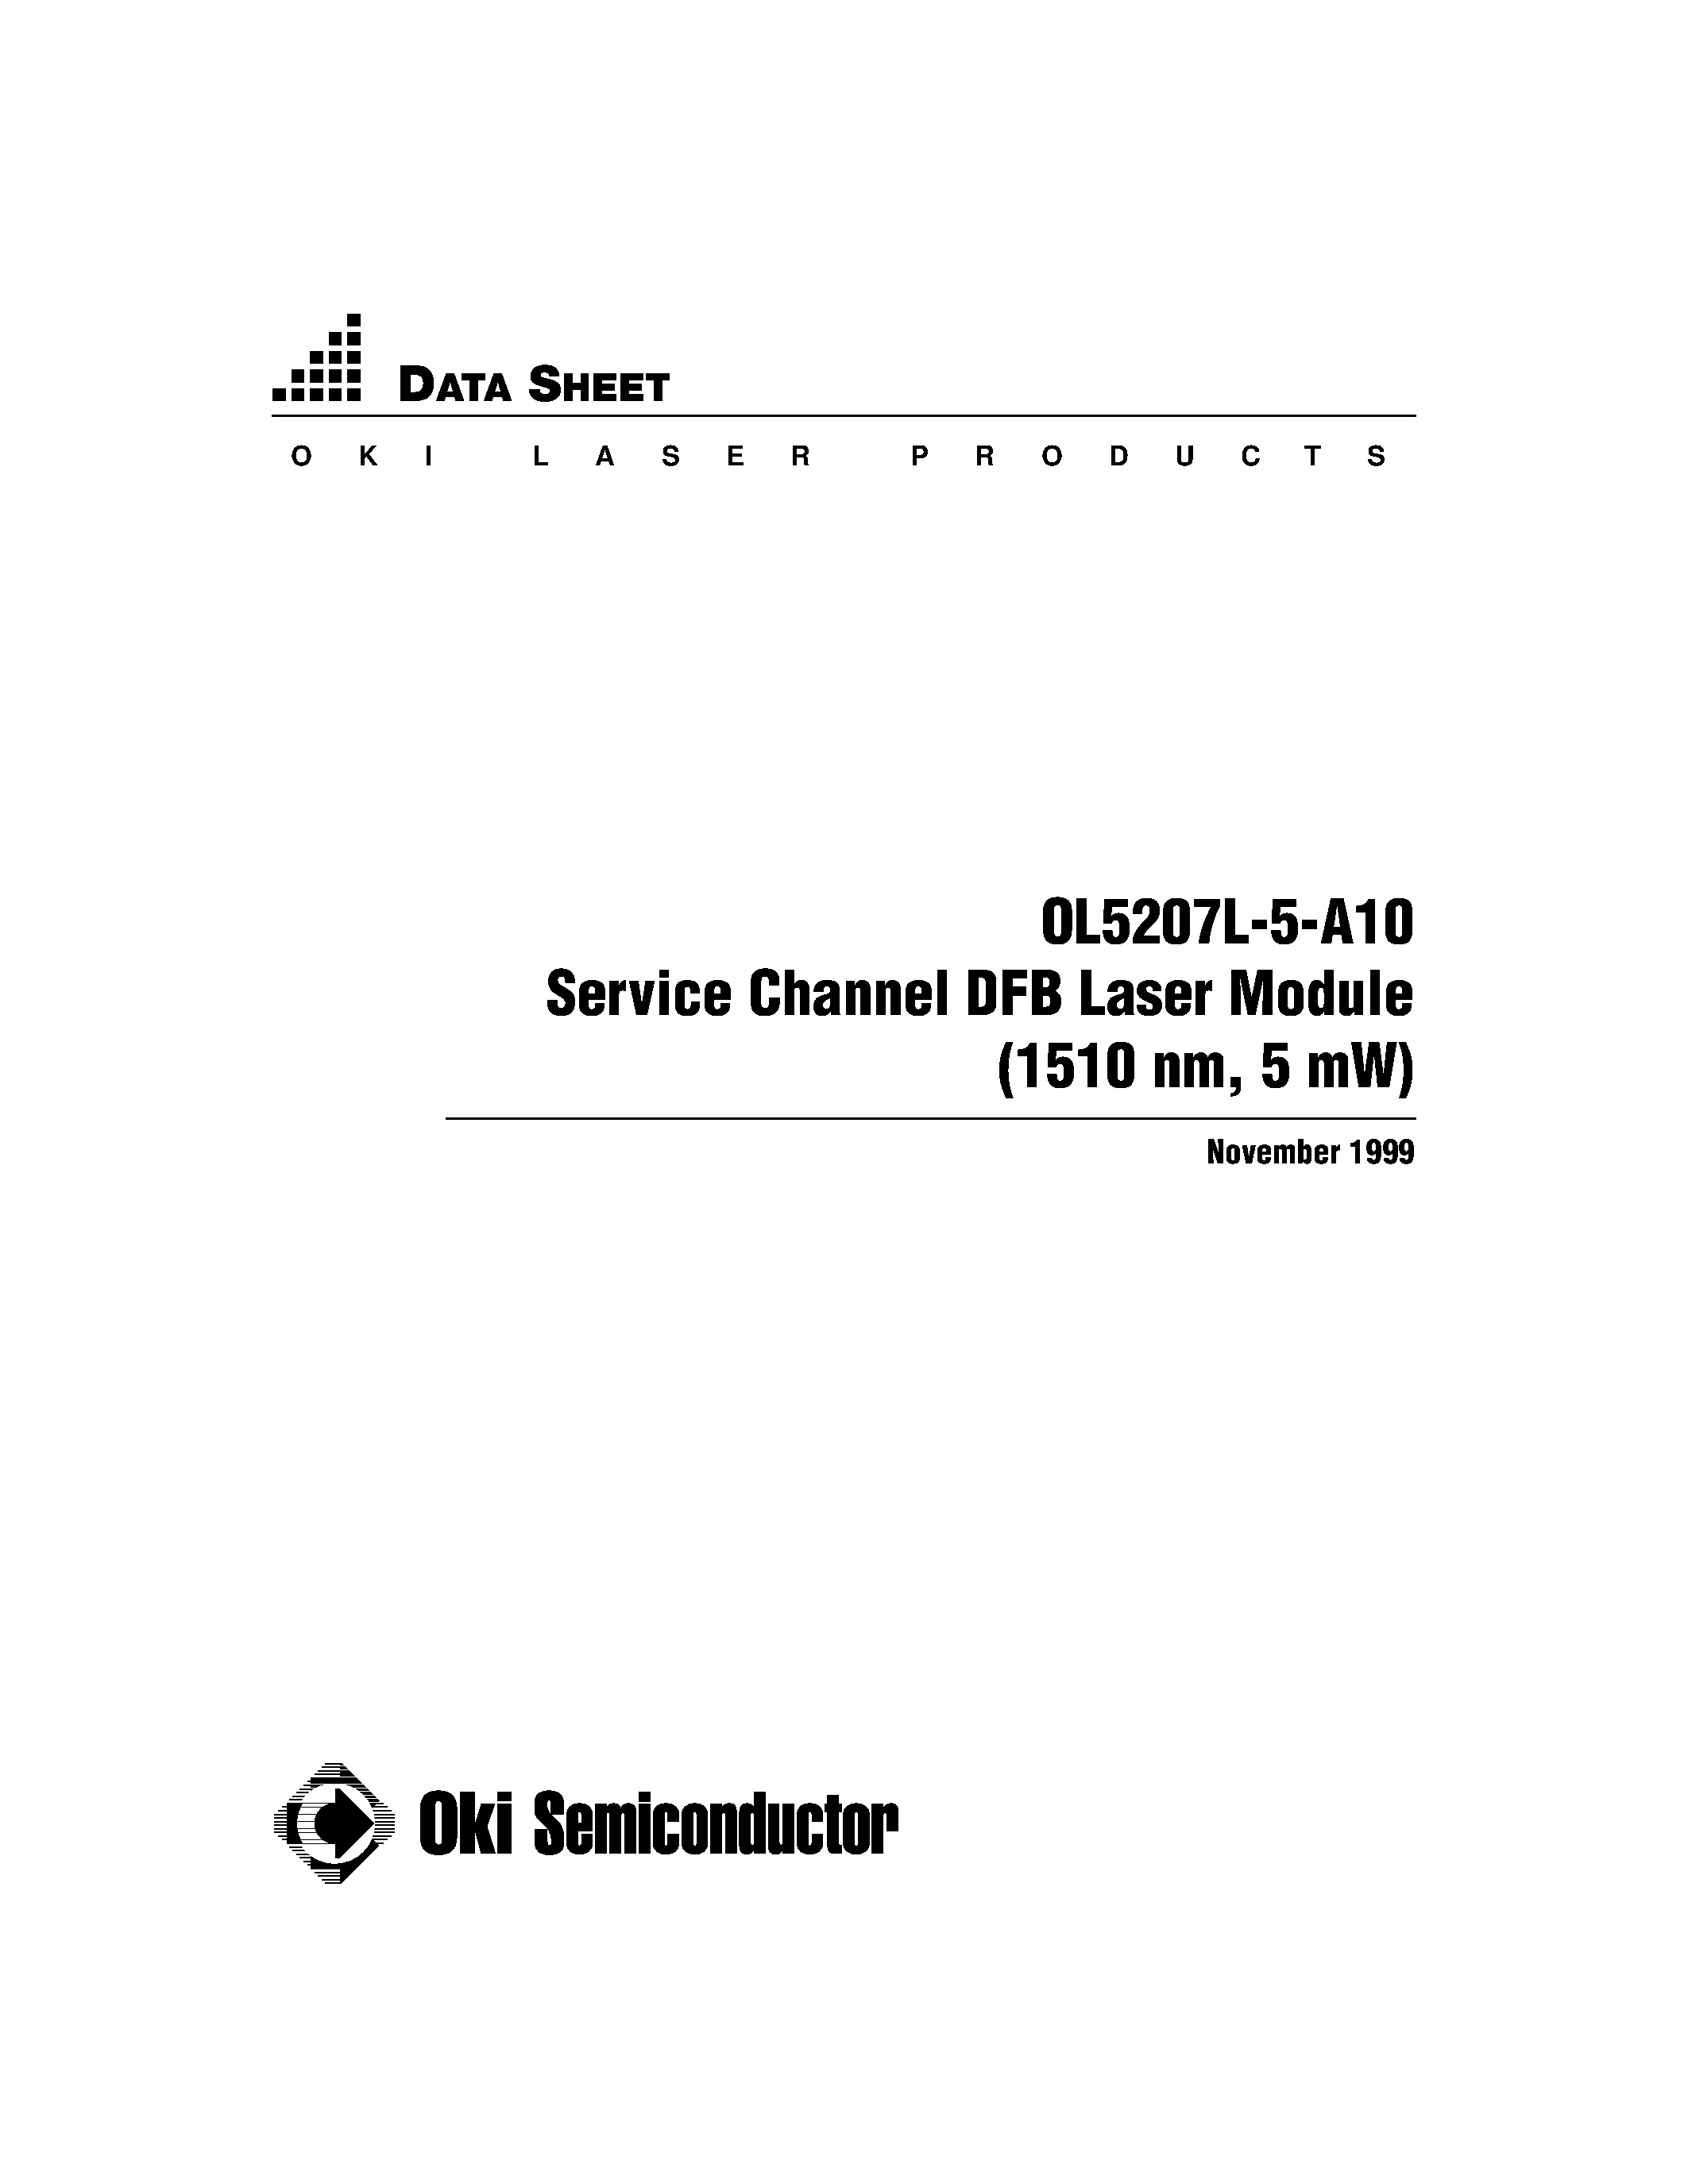 Даташит OL5207L-5-A10 - Service Channel DFB Laser Module (1510 nm / 5 mW) страница 1